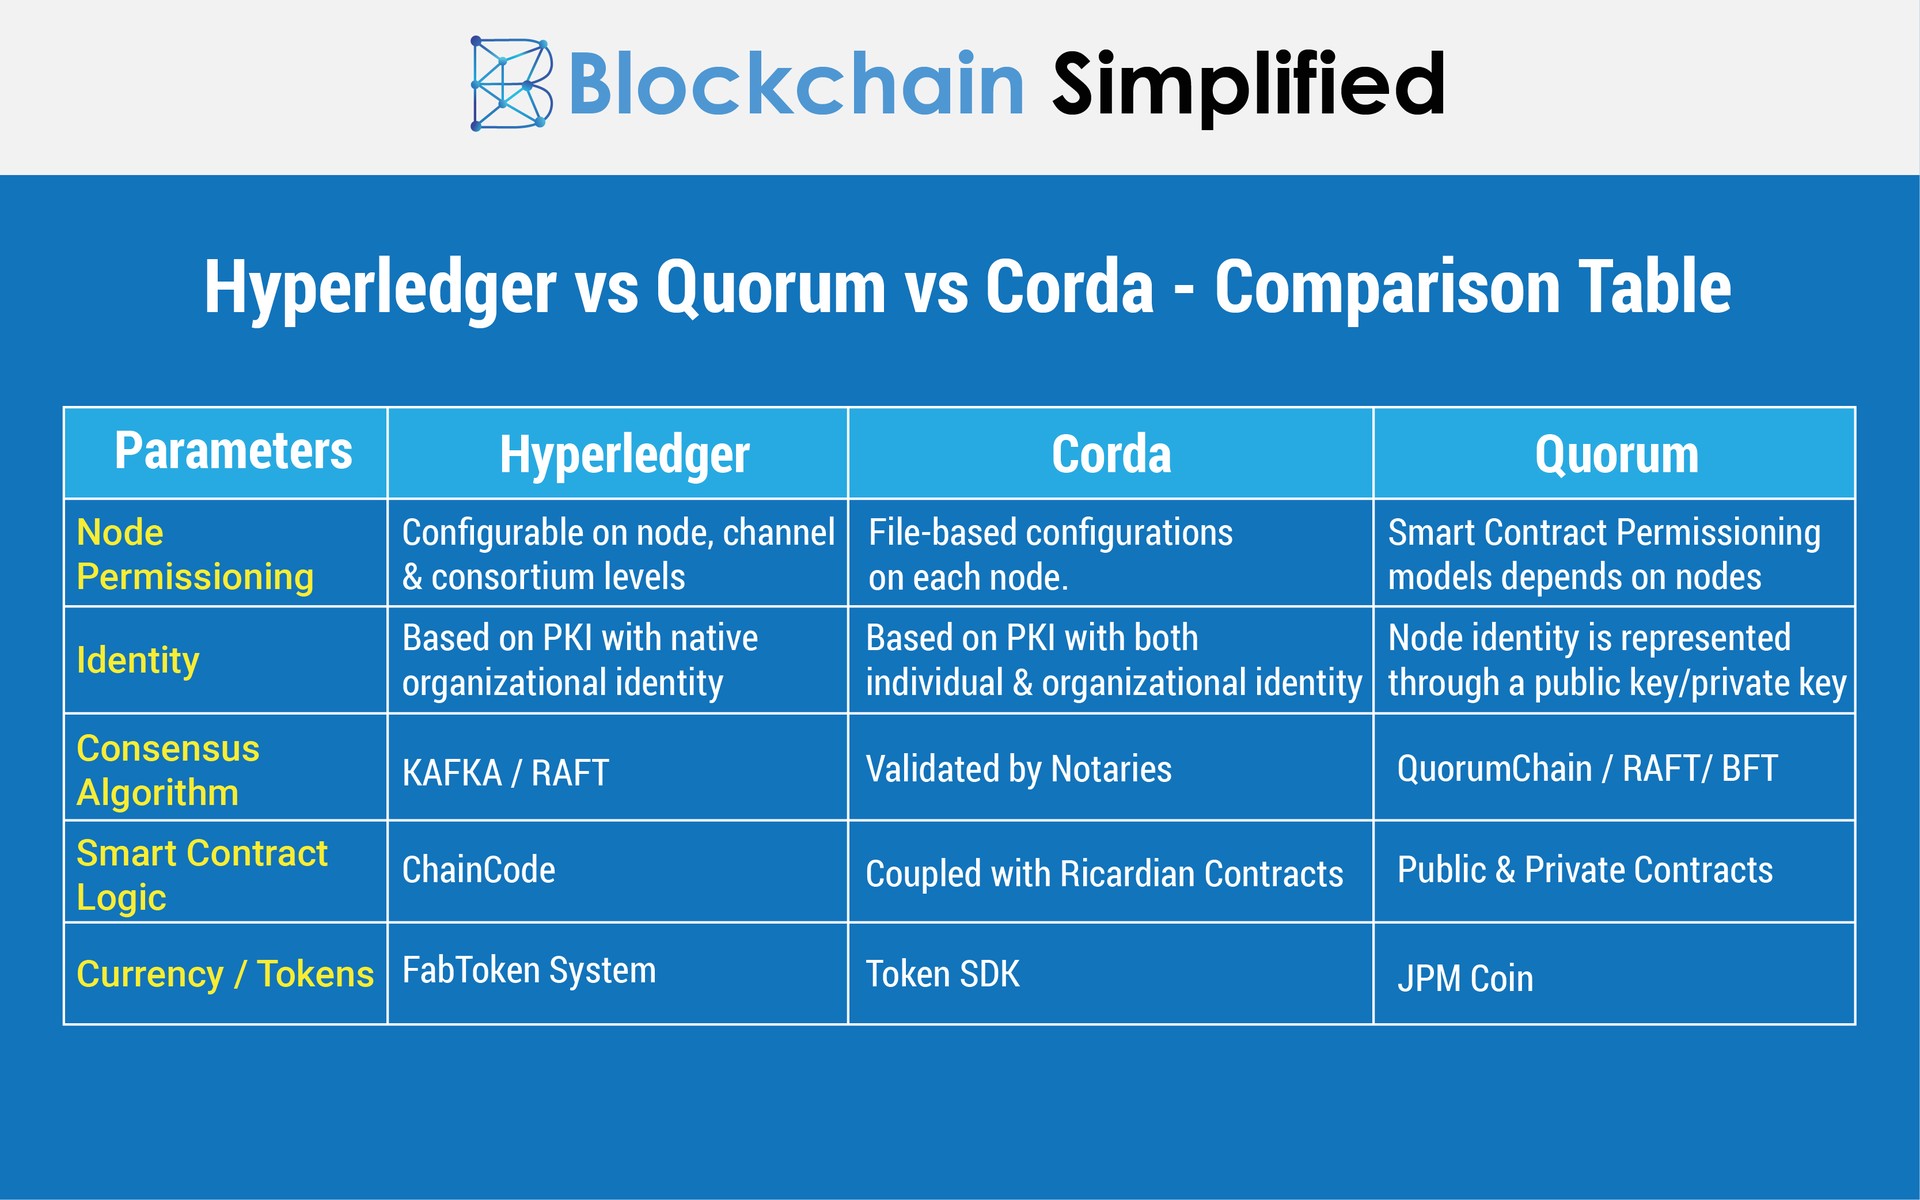 Hyperledger vs Quorum vs Corda differences